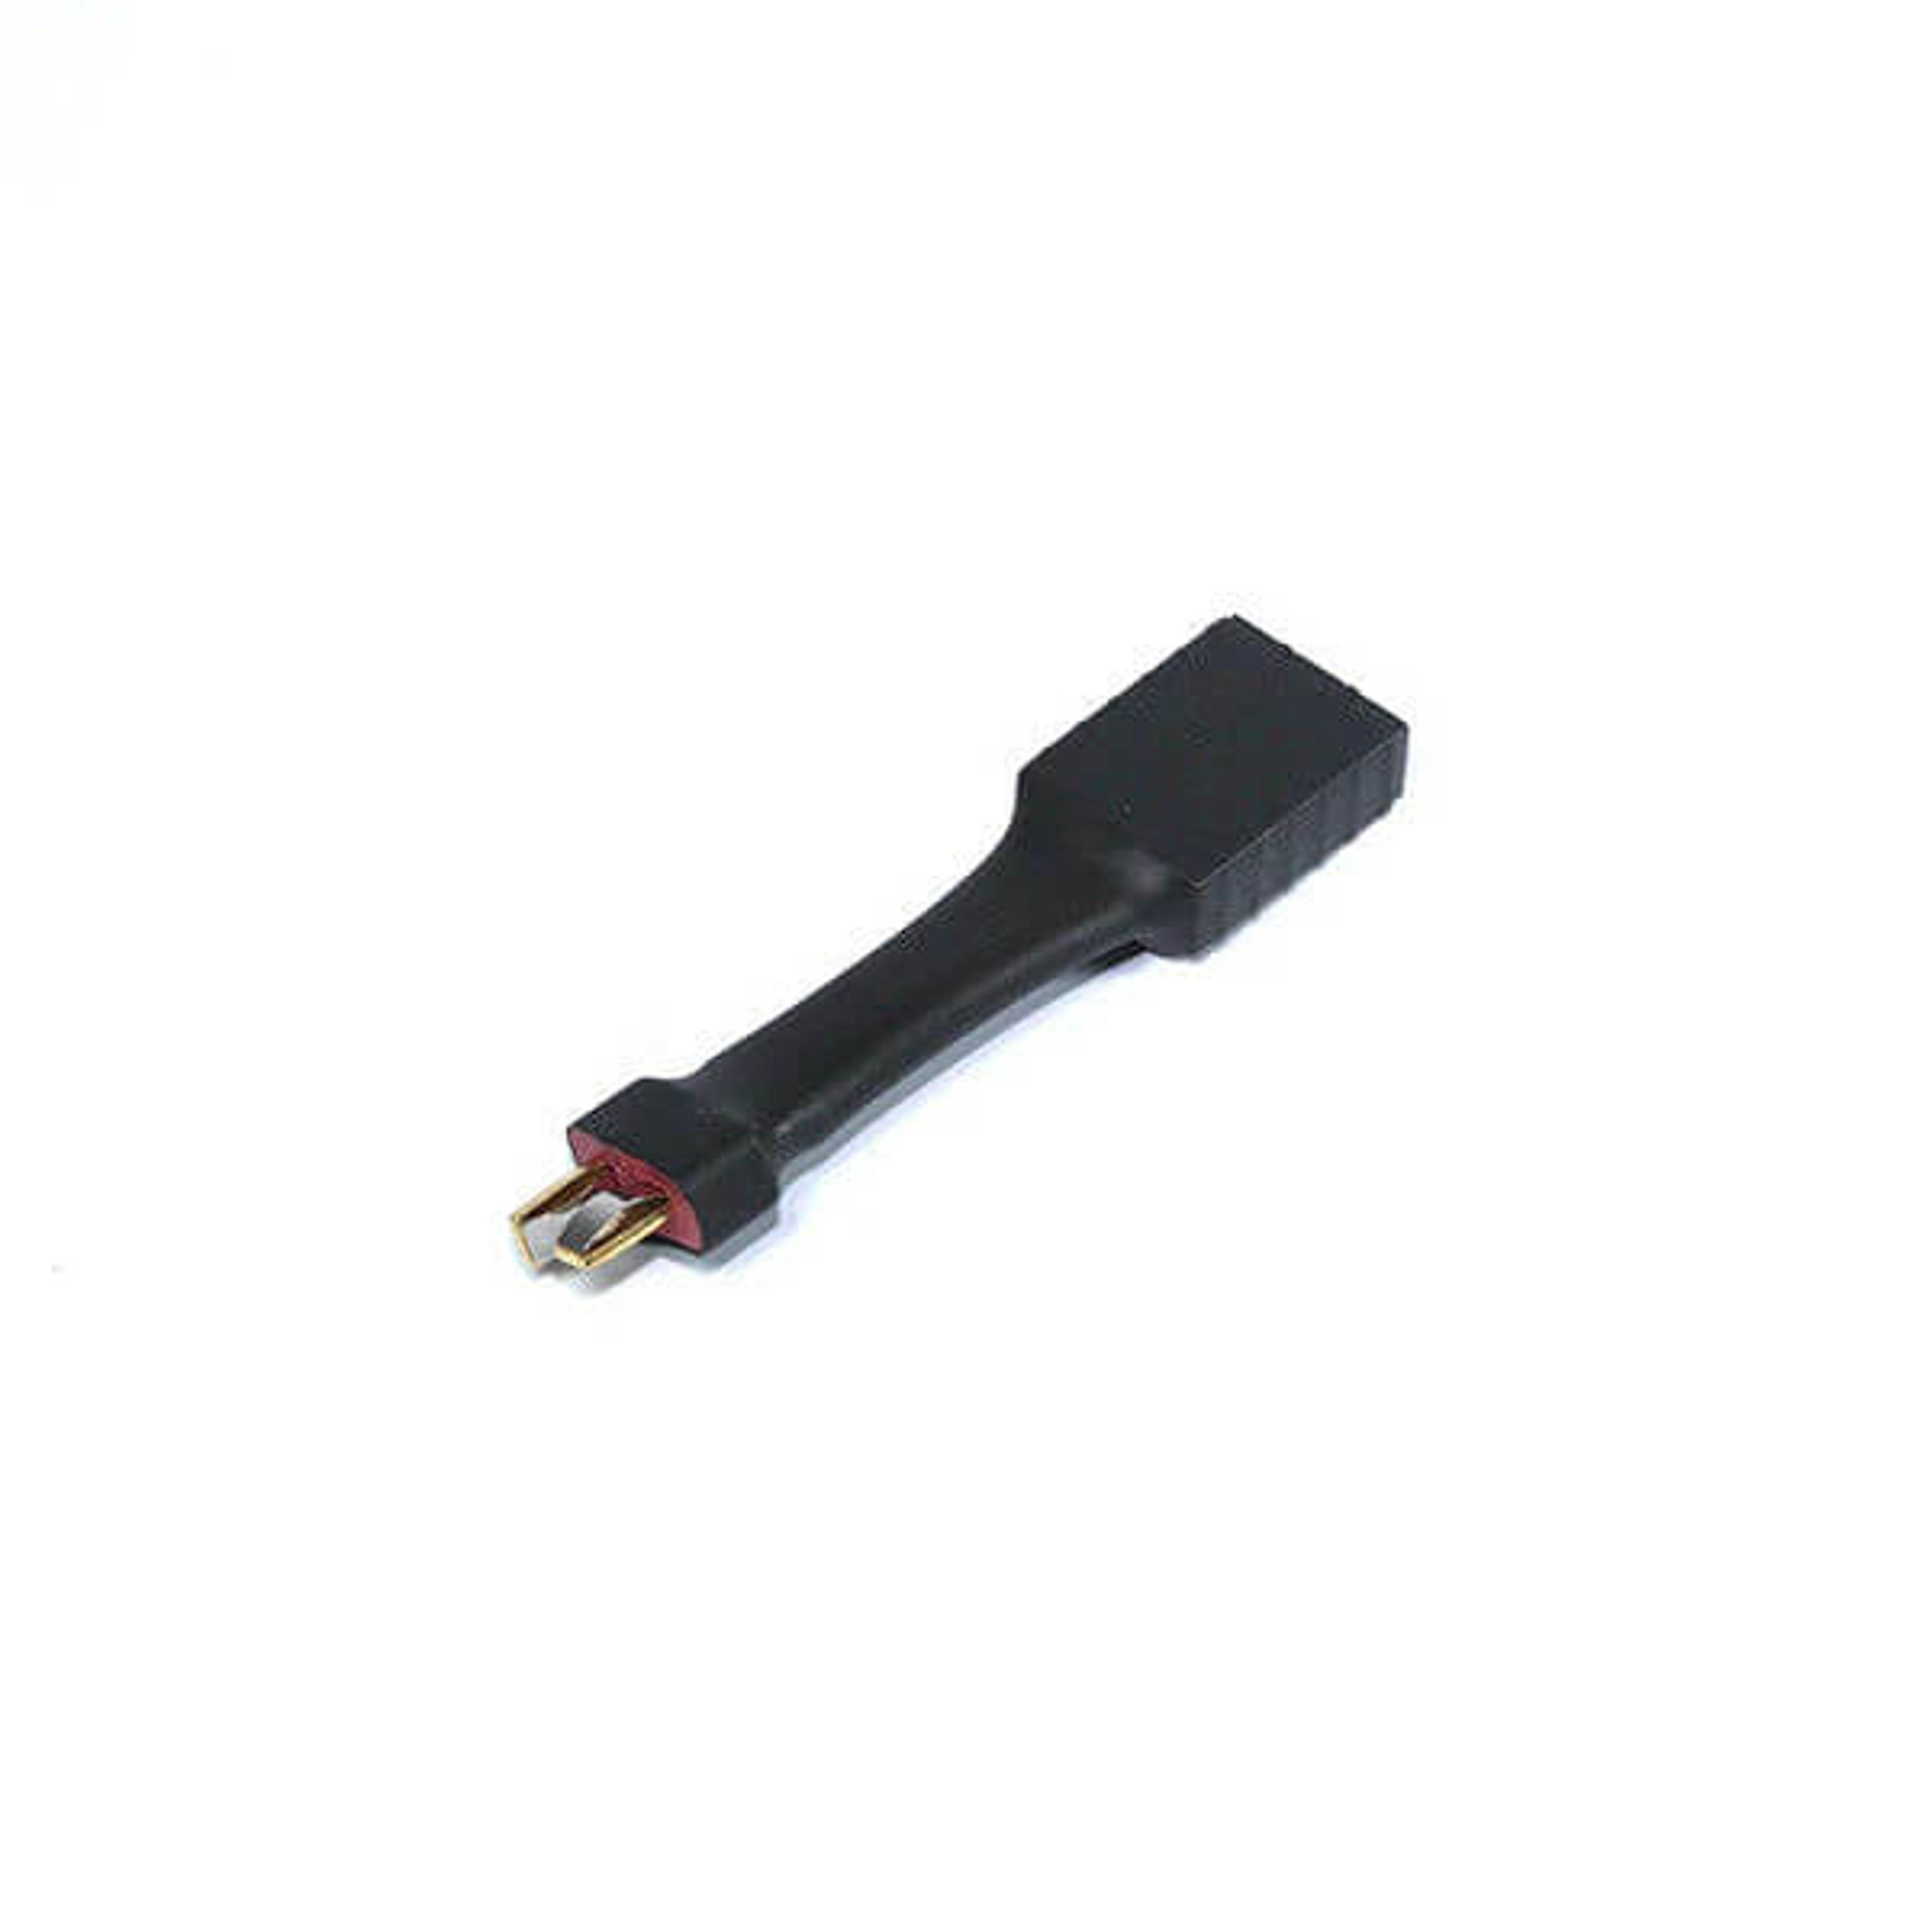 Battery/ESC Adapter: Female TRX HC to Male Deans (T-Plug)